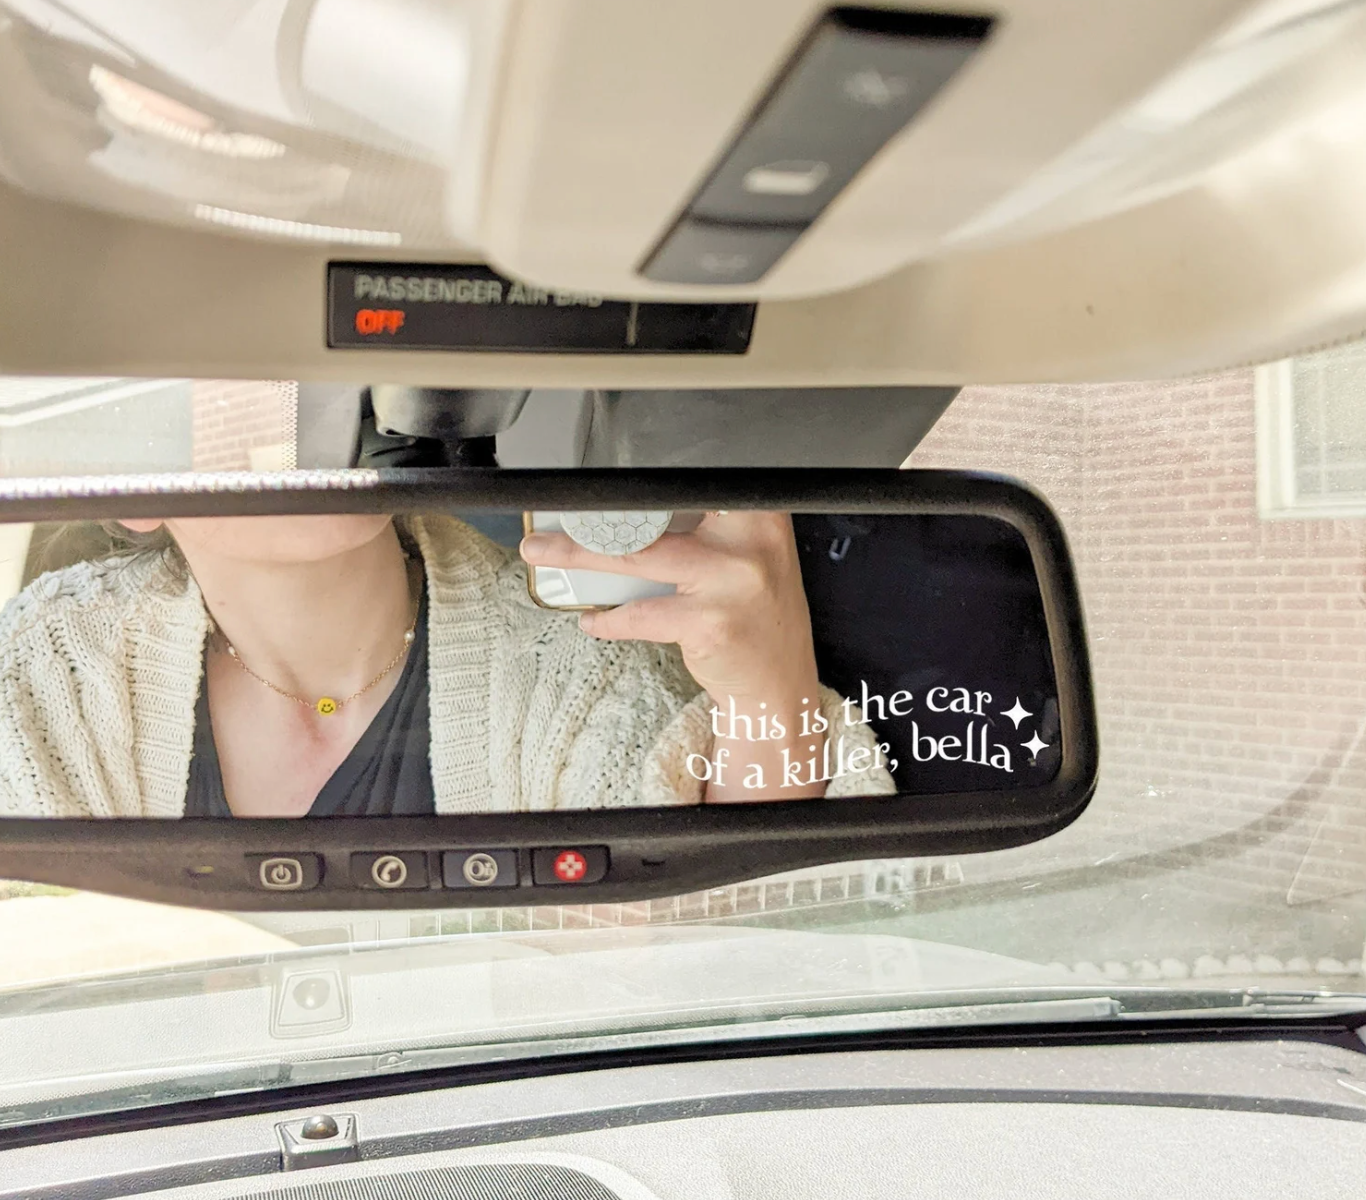 Ribbons Passenger Princess Car Mirror Decal, Car Mirror Sticker, Rear View Mirror Sticker, Car Decal Sticker (White)